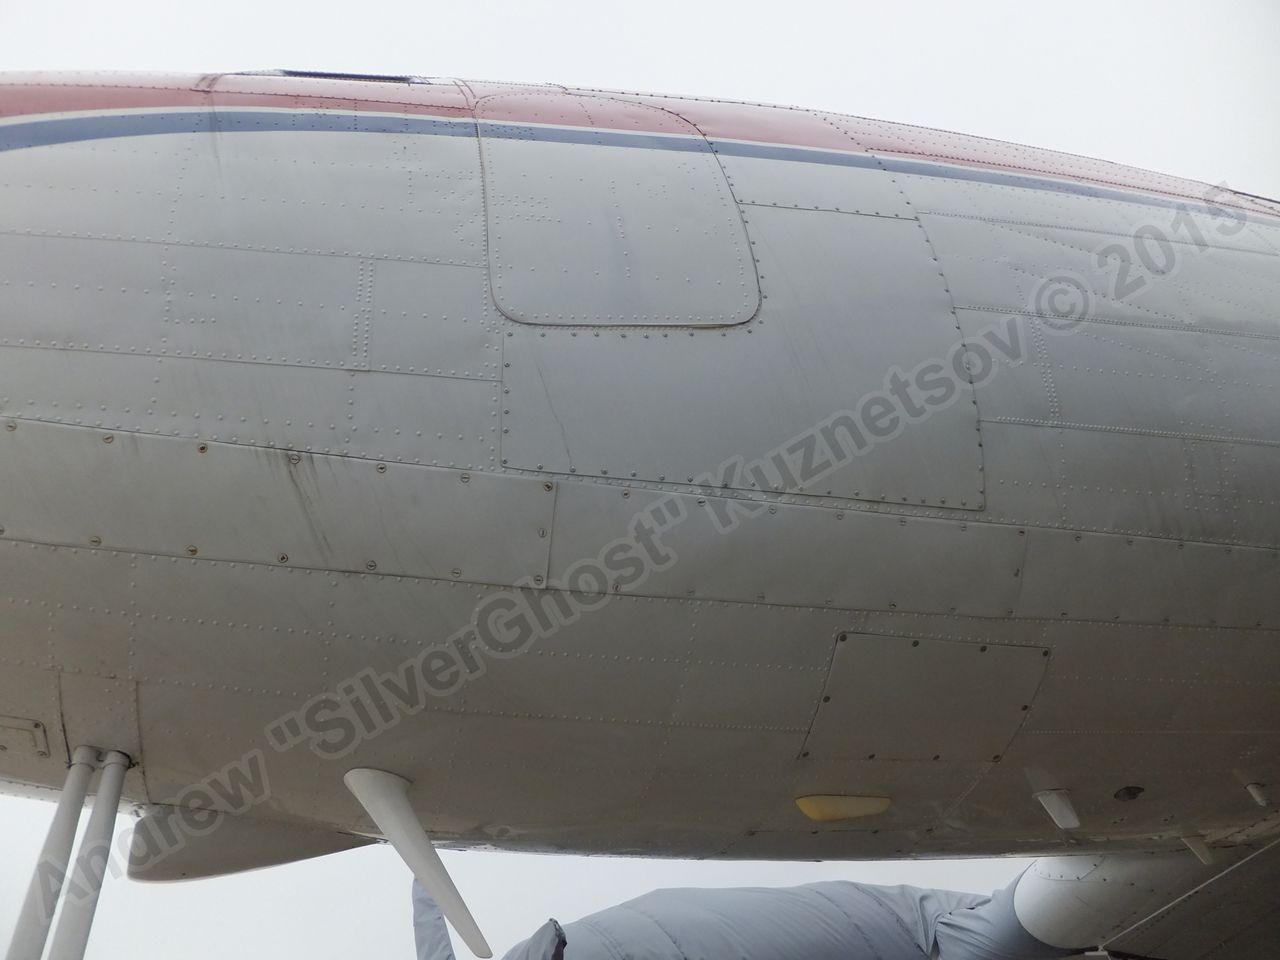 DC-3_Stupino_0019.jpg